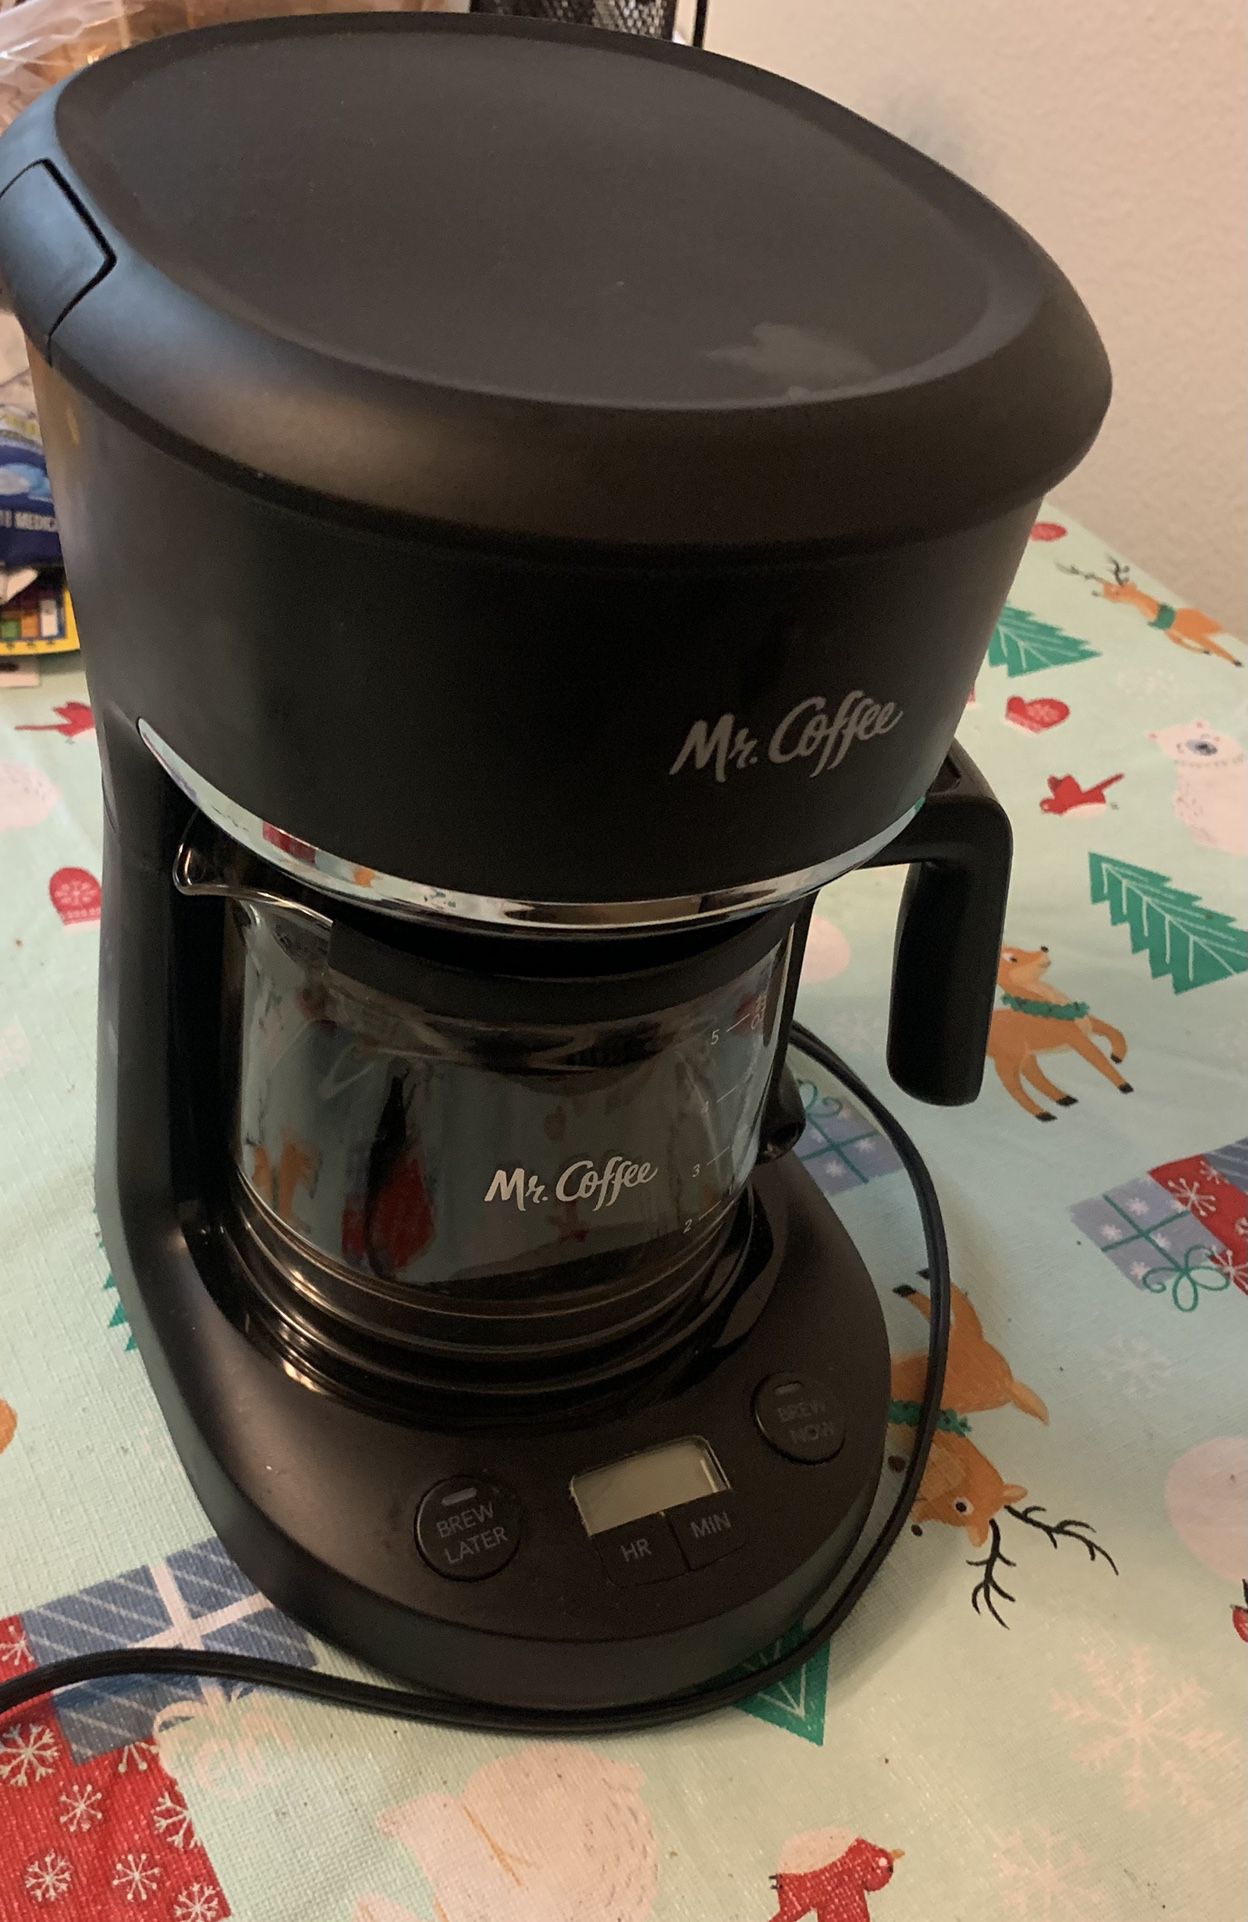 Mr Coffee -5 Cup Coffee Maker